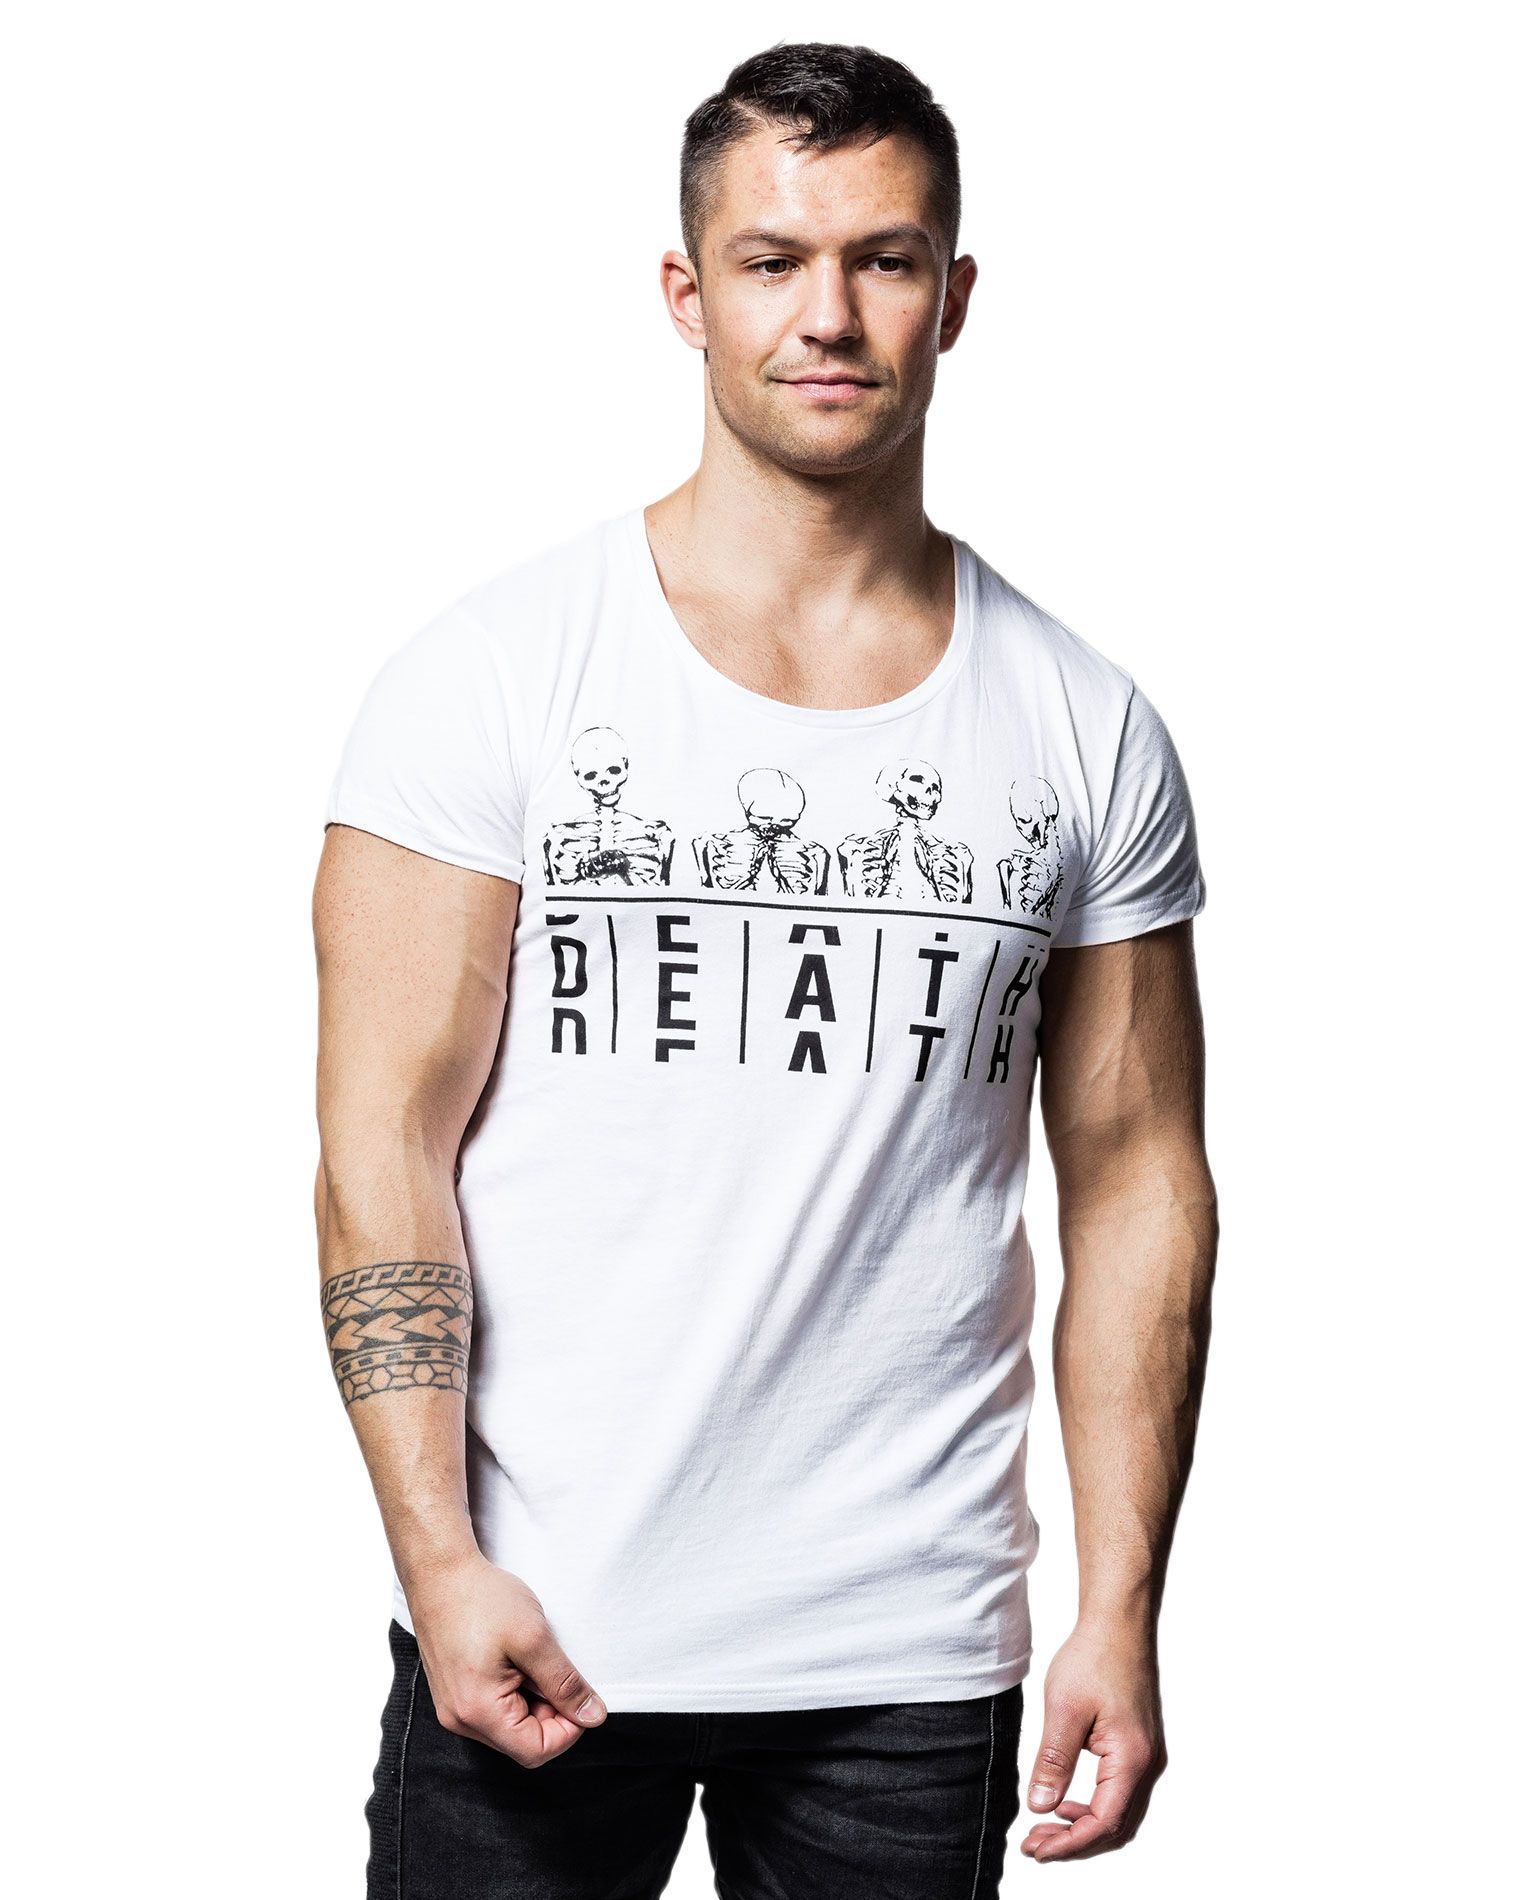 Jared White Trueprodigy - 2133 - Print-T-Shirts - Jerone.com